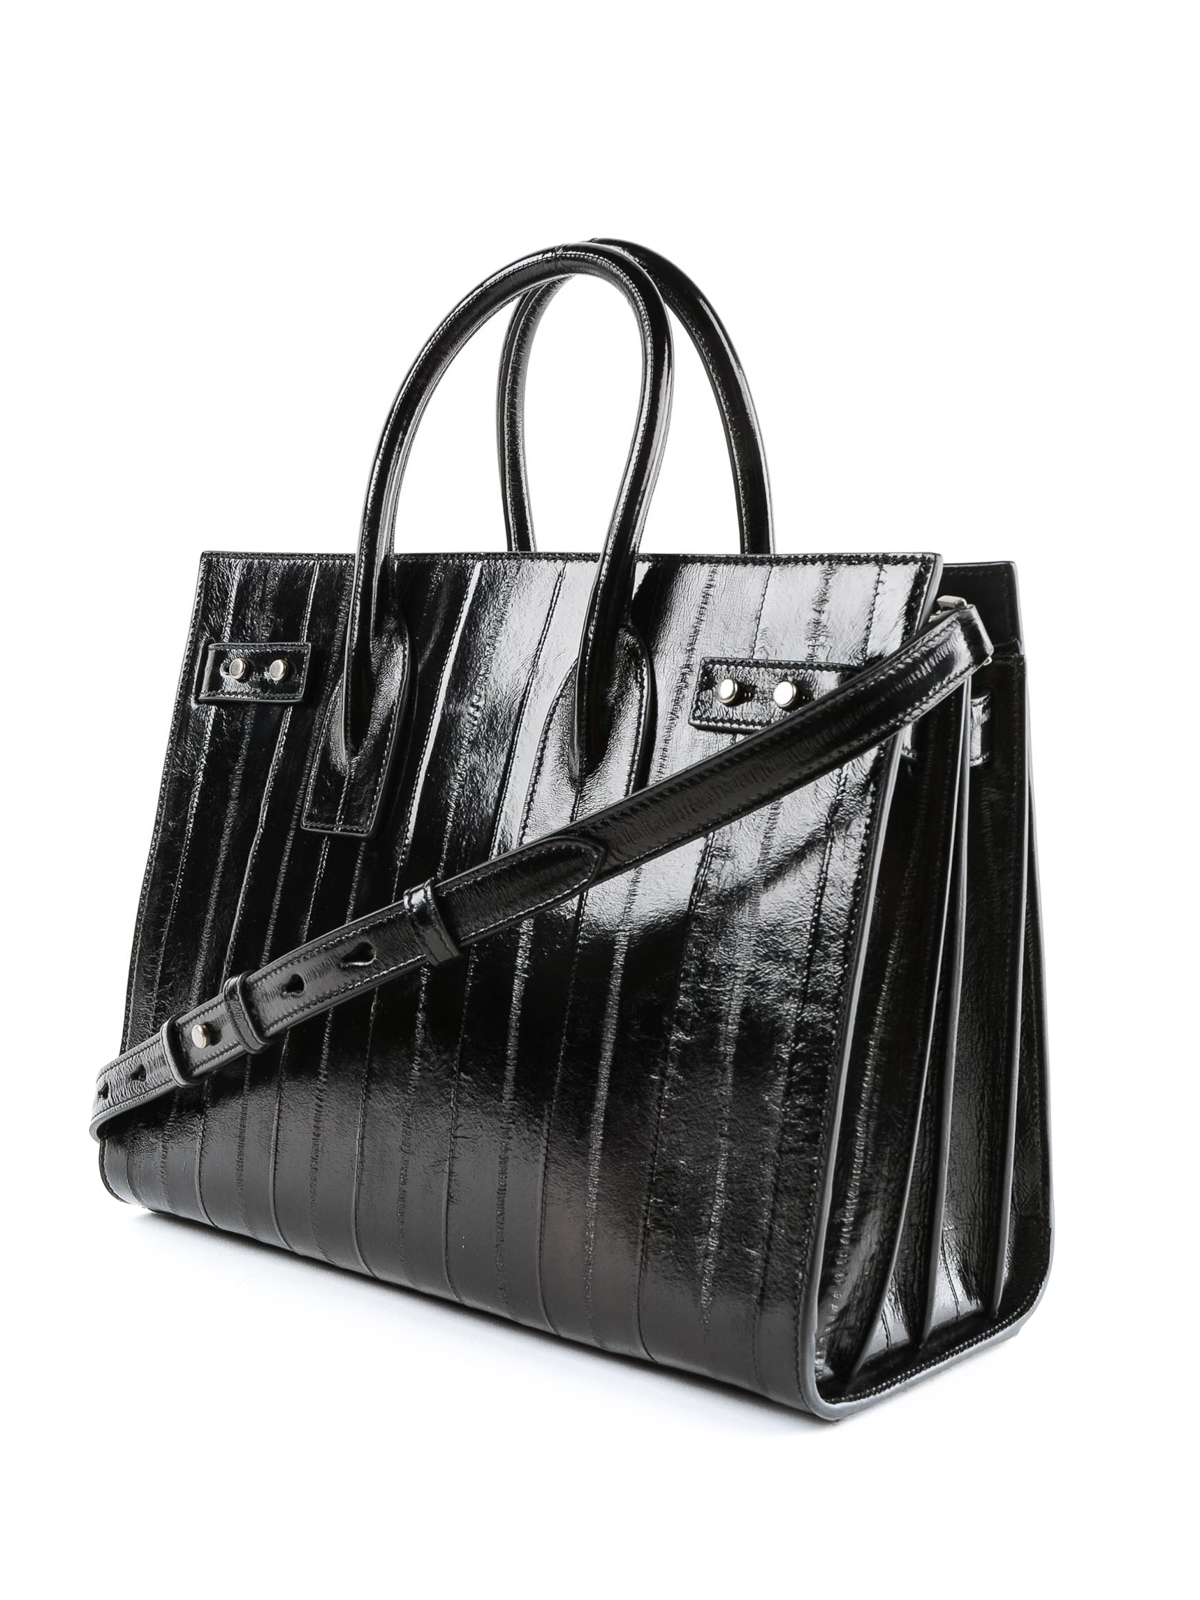 iKRIX-saint-laurent-totes-bags-sac-de-jour-precious-eel-leather-handbag-00000145768f00s003.jpg